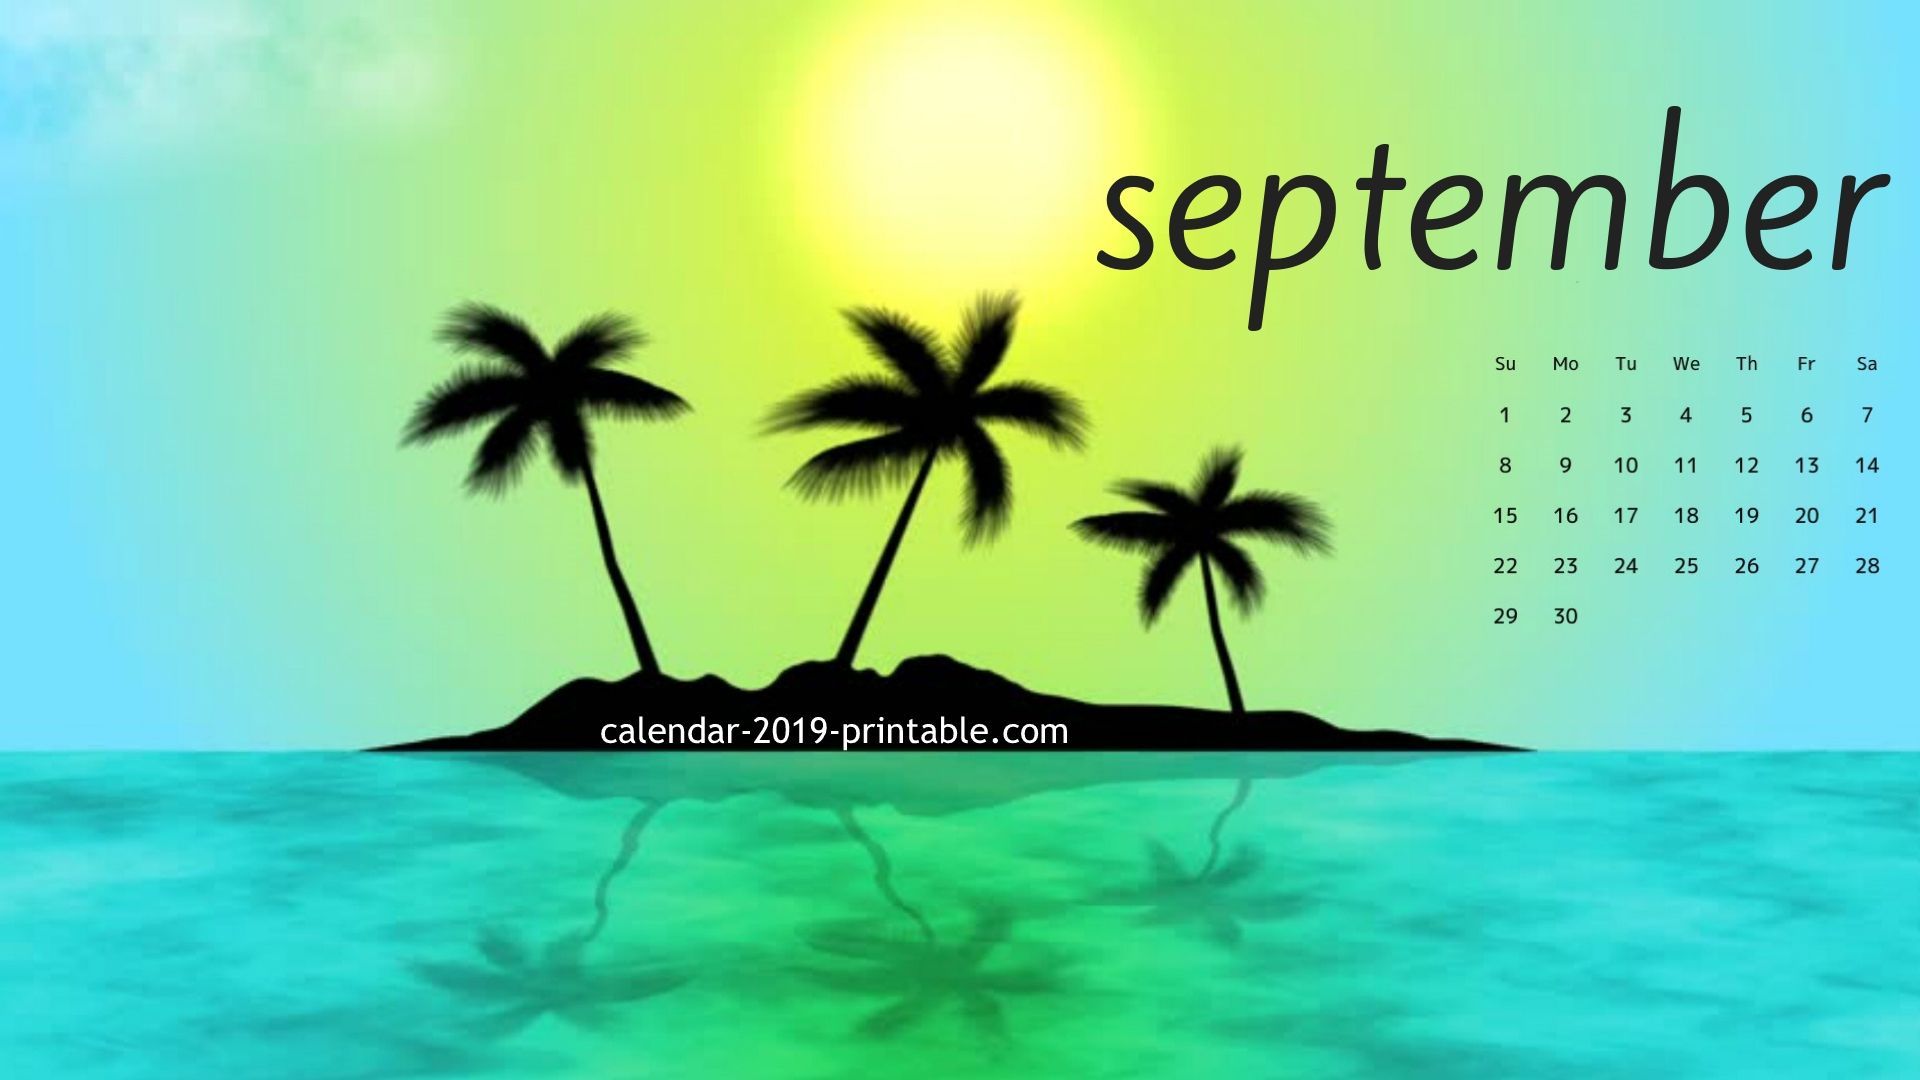 free-download-september-2019-calendar-nature-wallpaper-2019-calendars